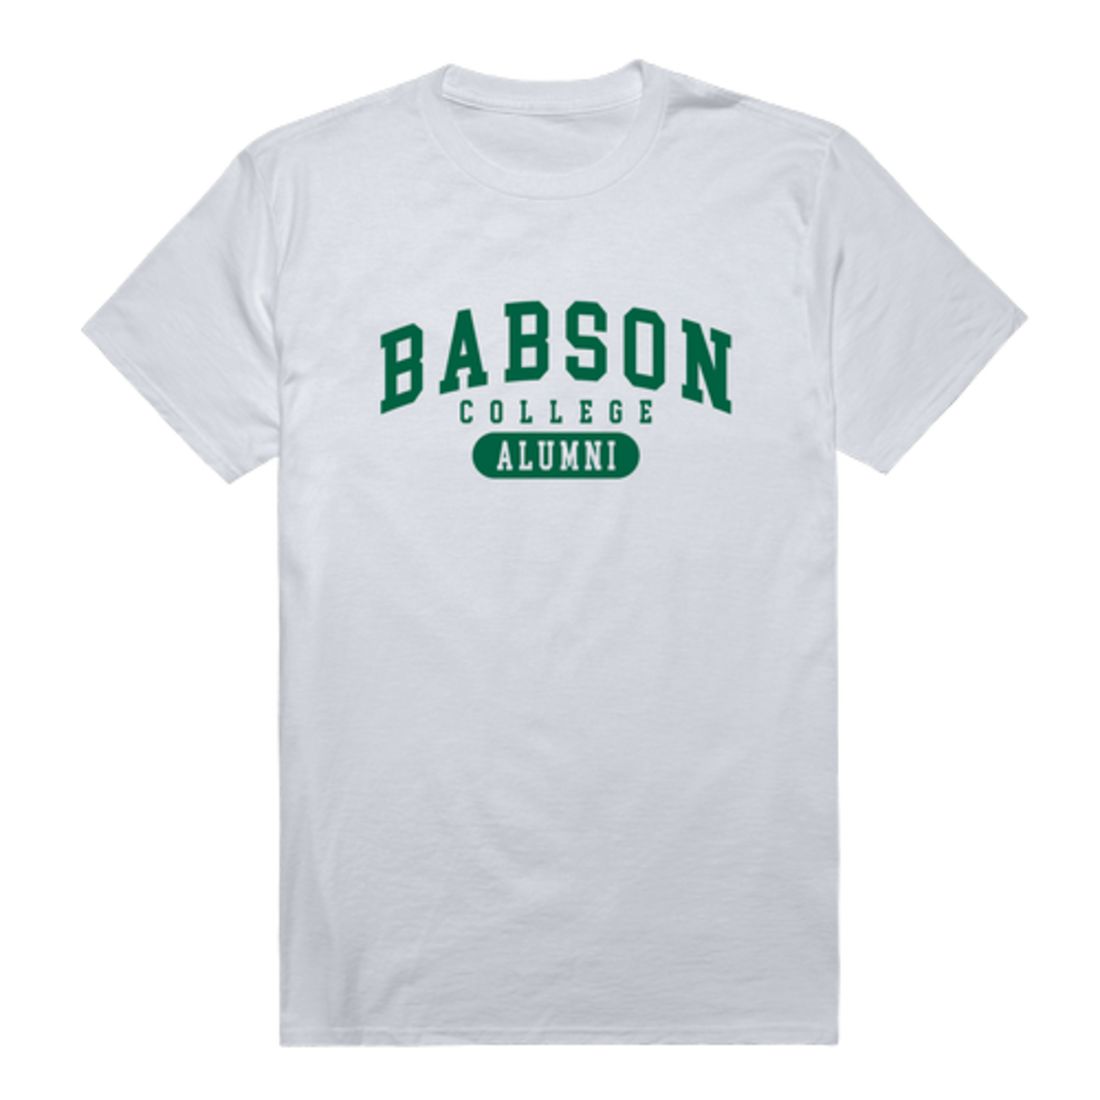 Babson College Beavers Alumni T-Shirts